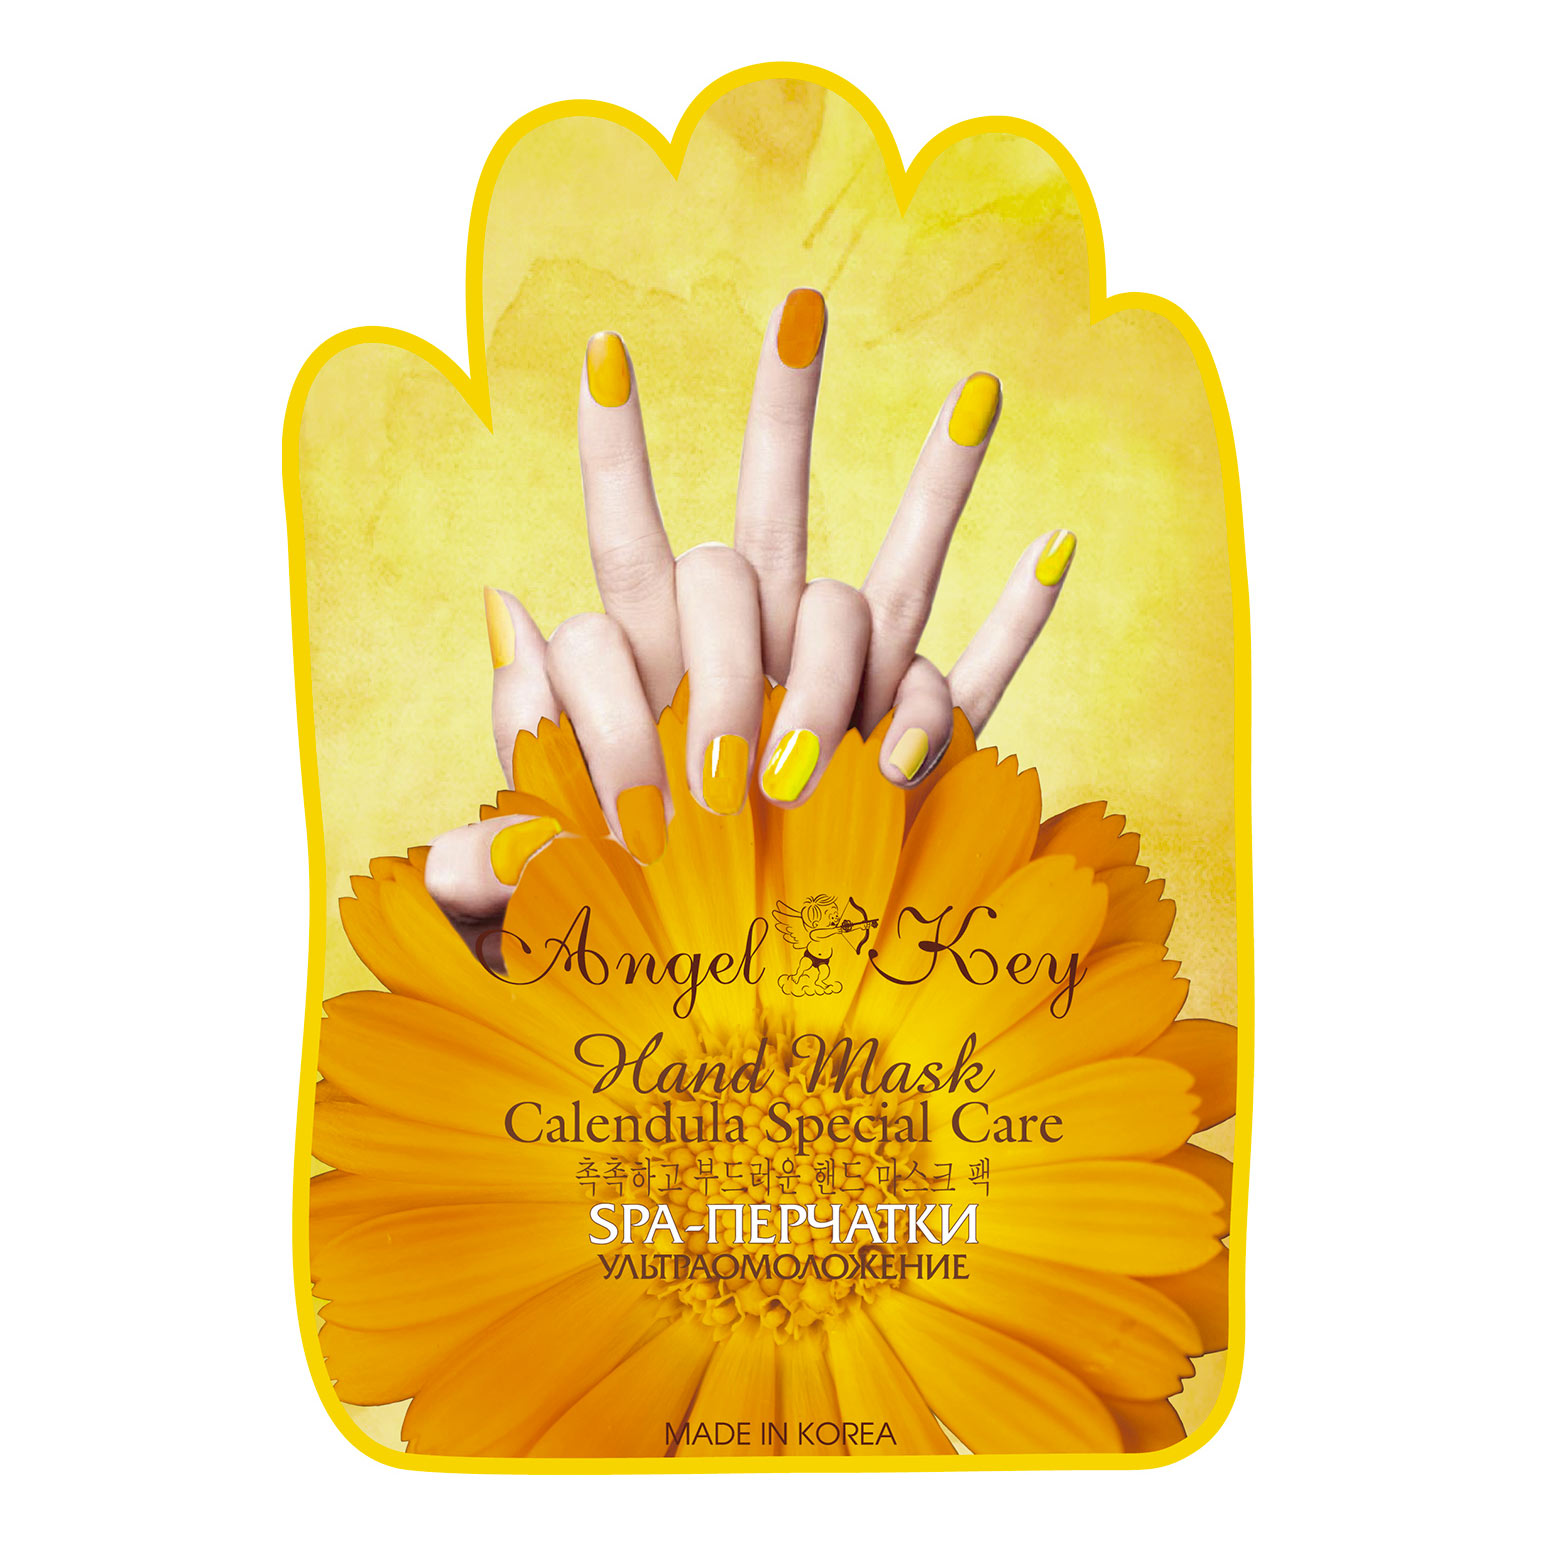 фото Spa-перчатки angel key hand mask calendula special care ультраомоложение